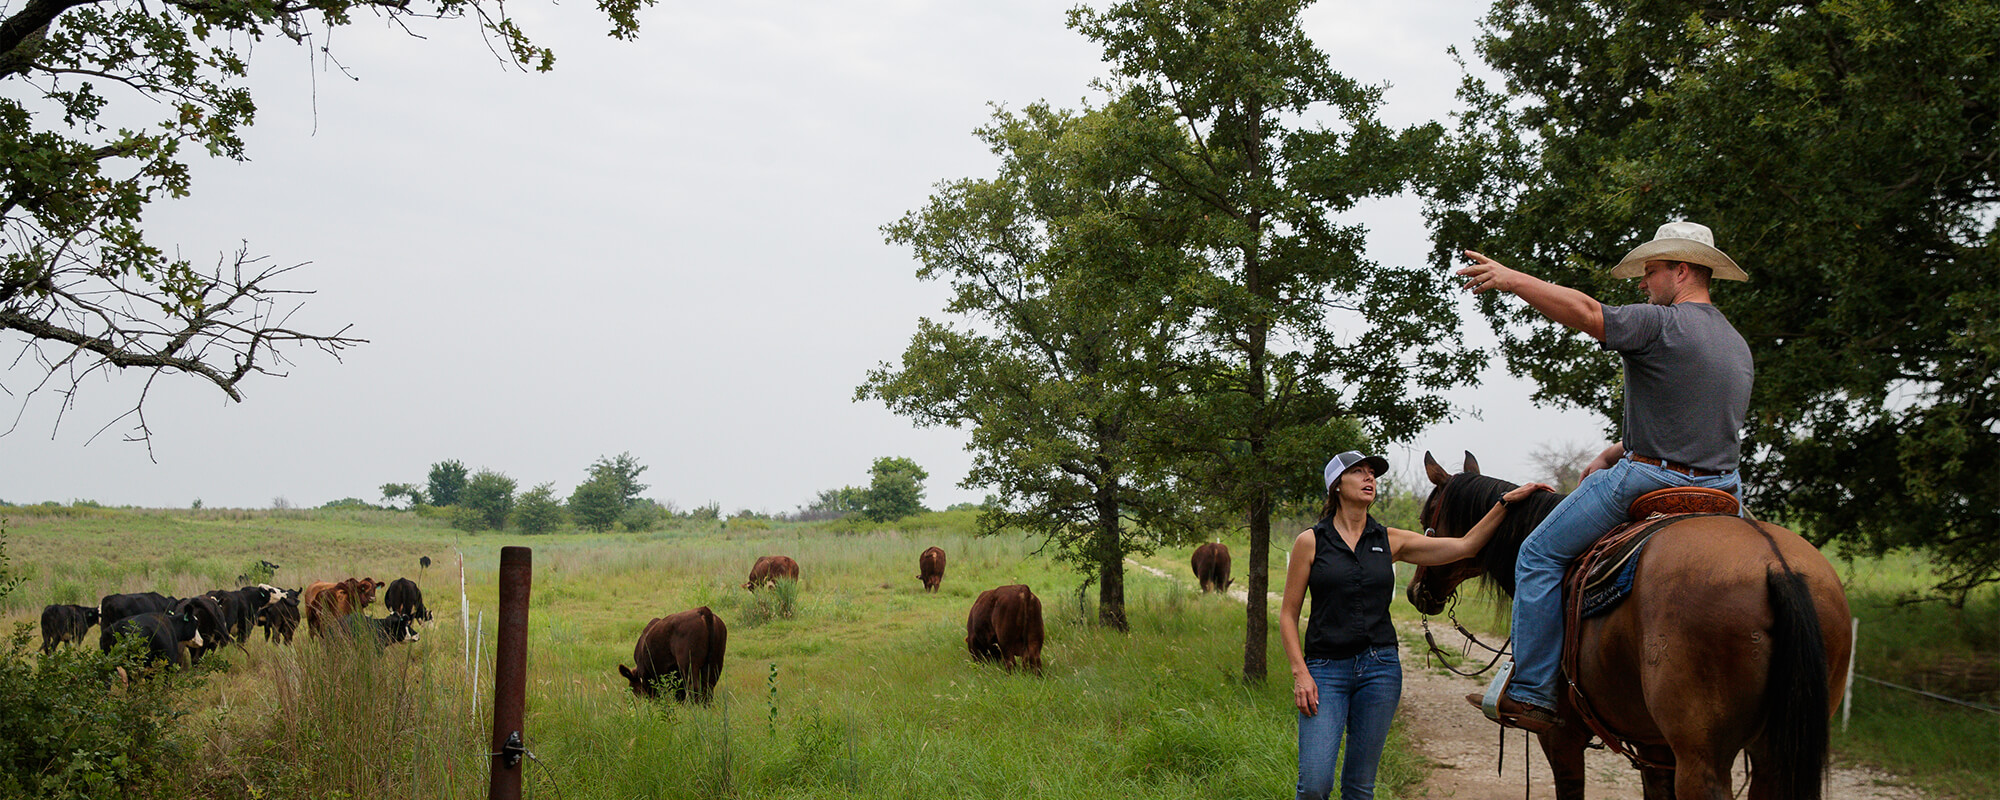 Ranch team talking in the field. Clark Roberts, on horseback, speaks with Caitlin Hebbert